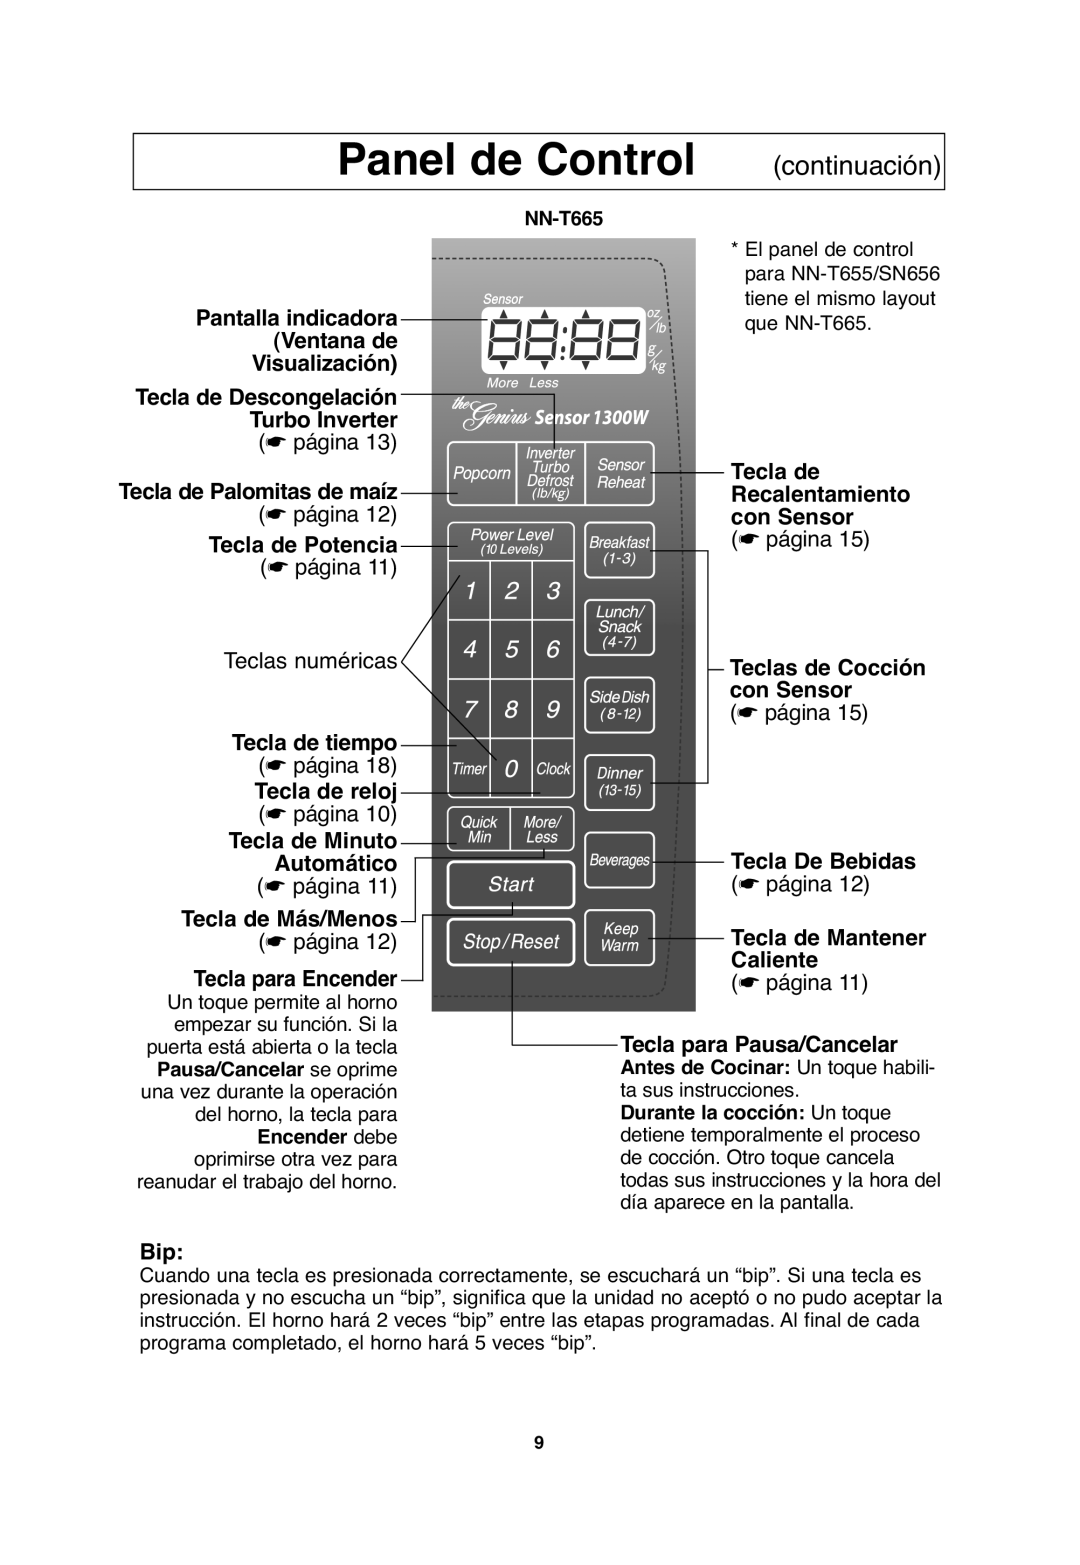 Panasonic NN-SN656, NN-T655, NN-T665 important safety instructions Panel de Control, continuación 